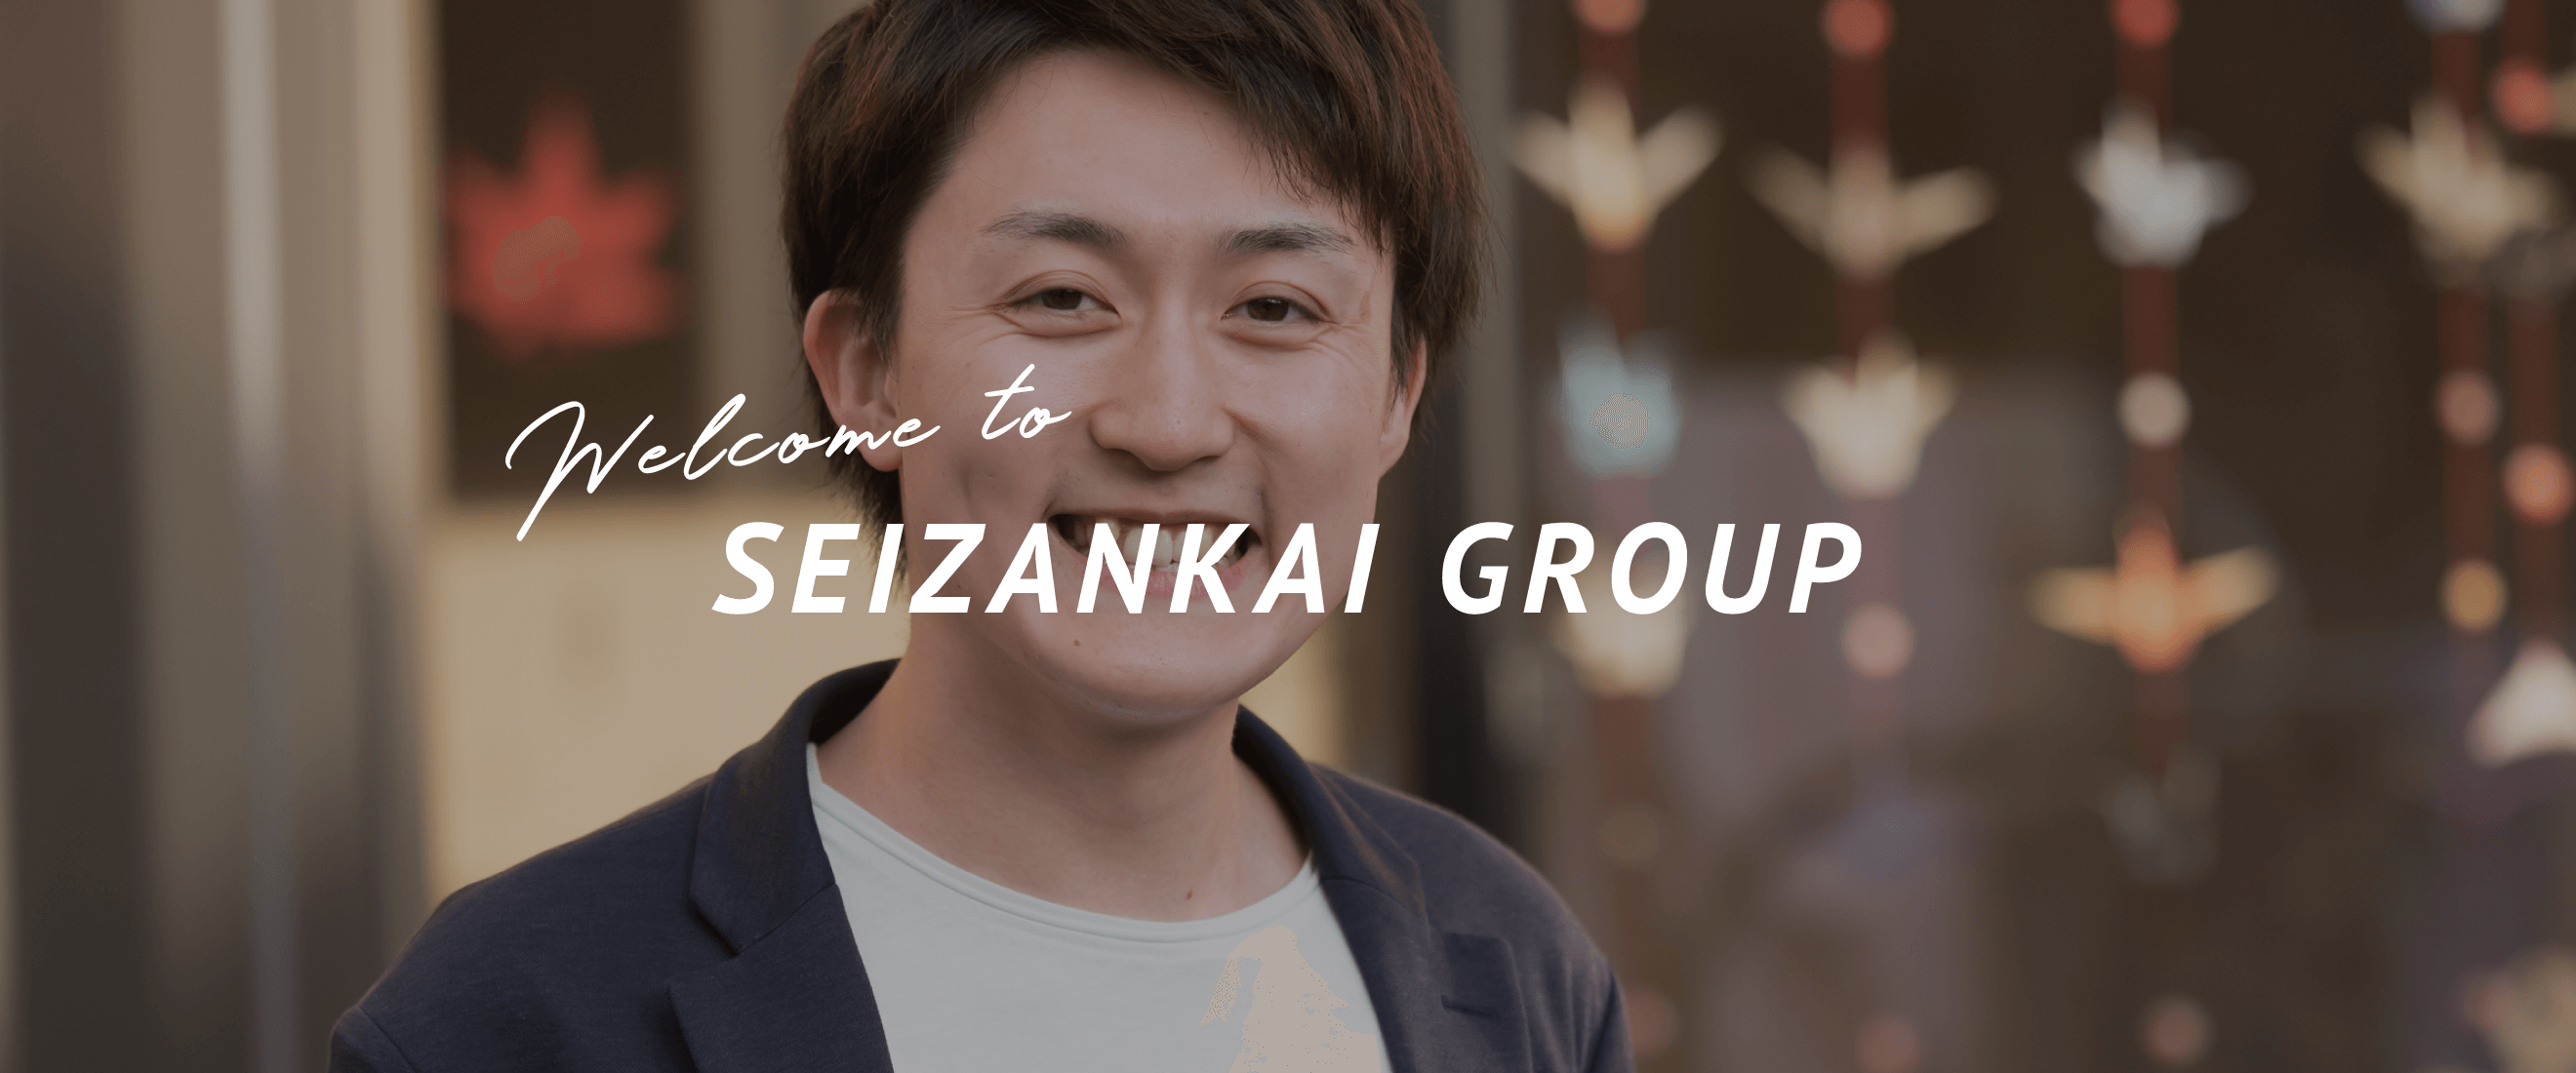 welcome to seizankai group